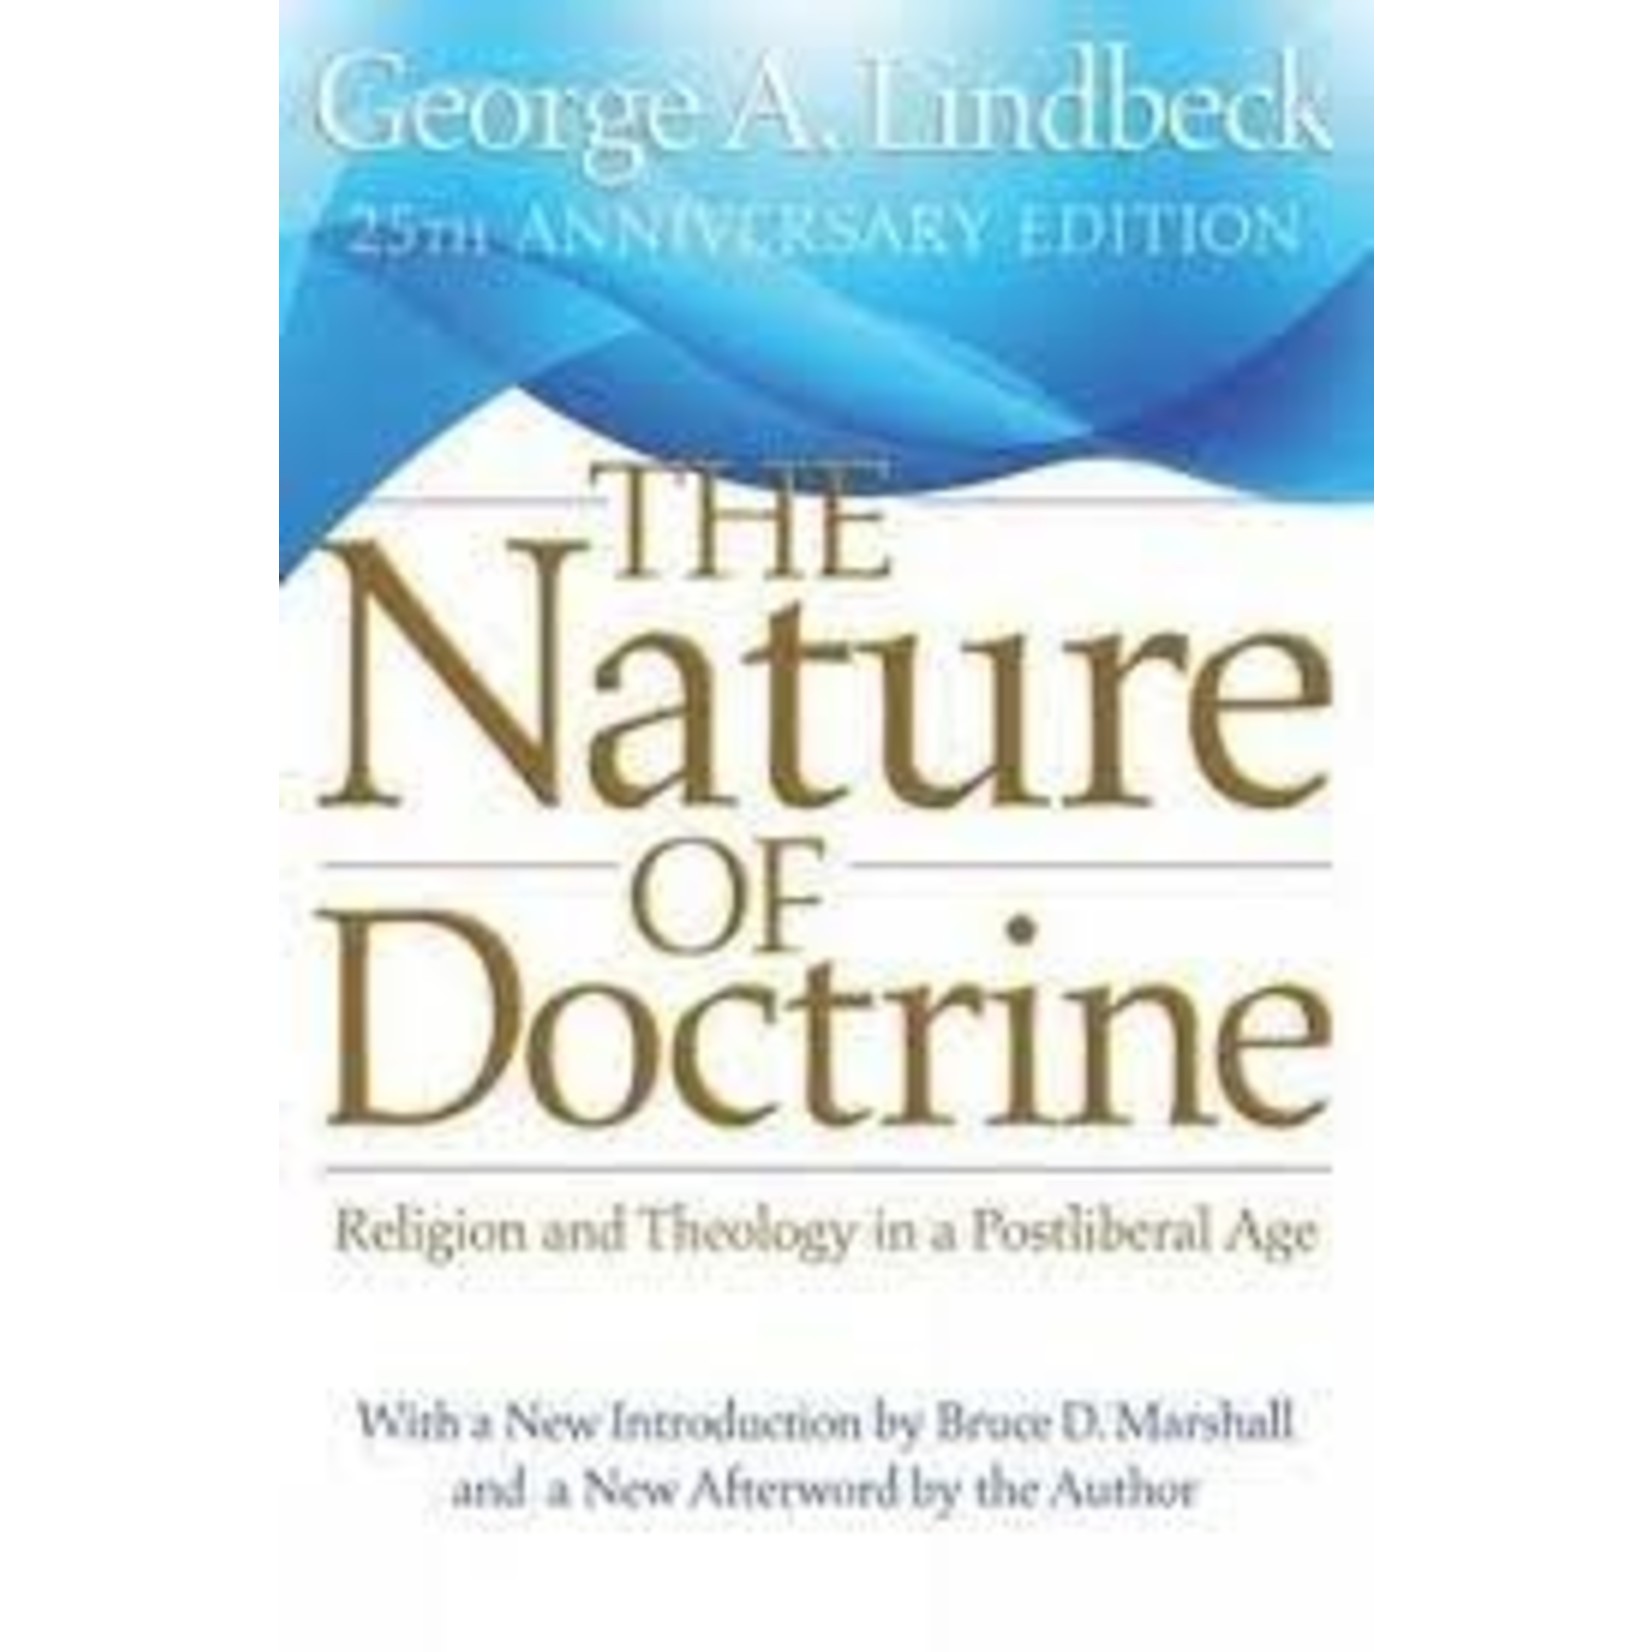 The Nature of Doctrine: Religion